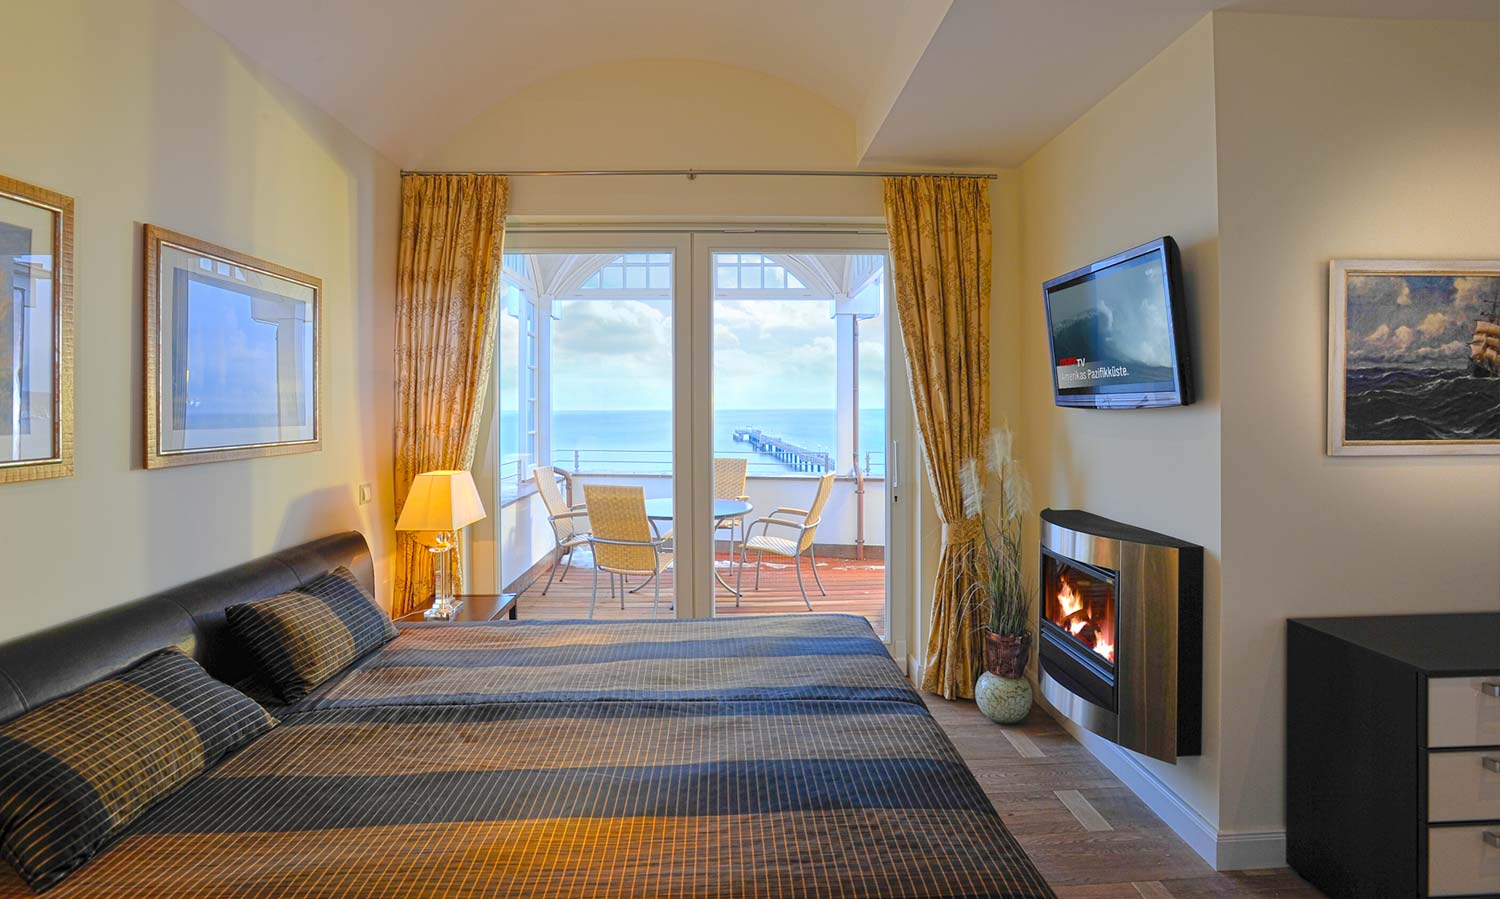 Luxus Penthouse Sea for Miles direkt am Strand in Binz mit traumhaftem Meerblick